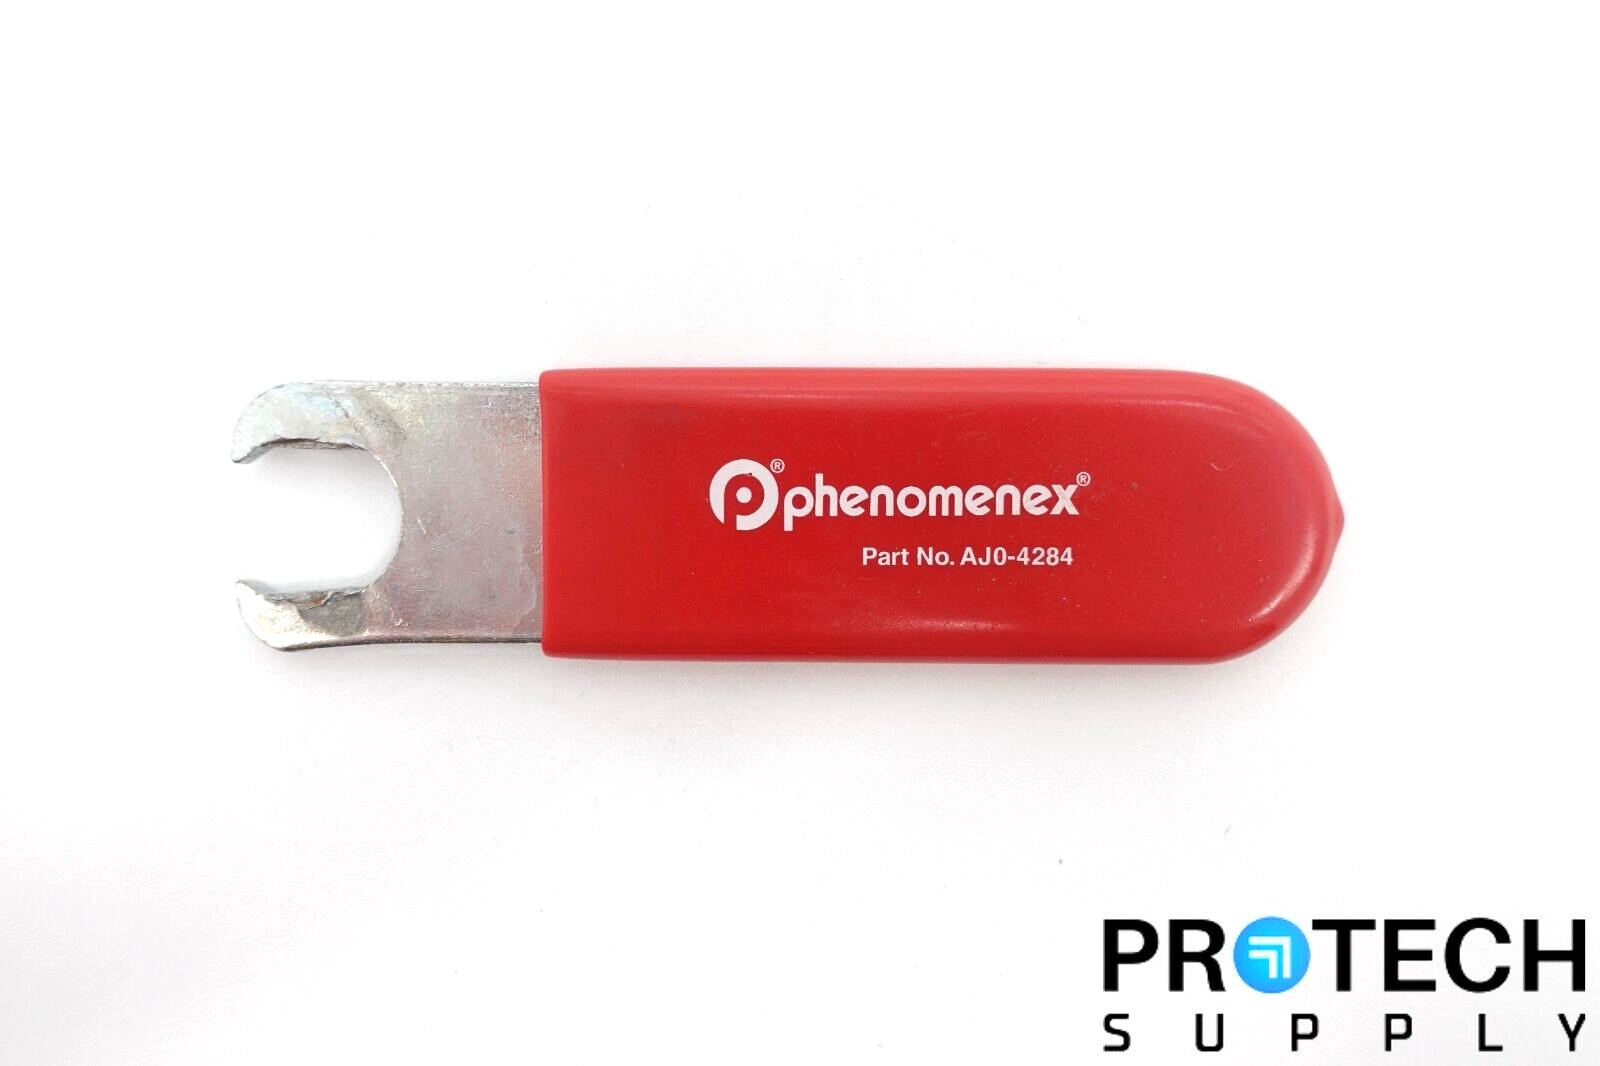 Phenomenex AJ0-4284 SecurityGuard Wrench Cartridge